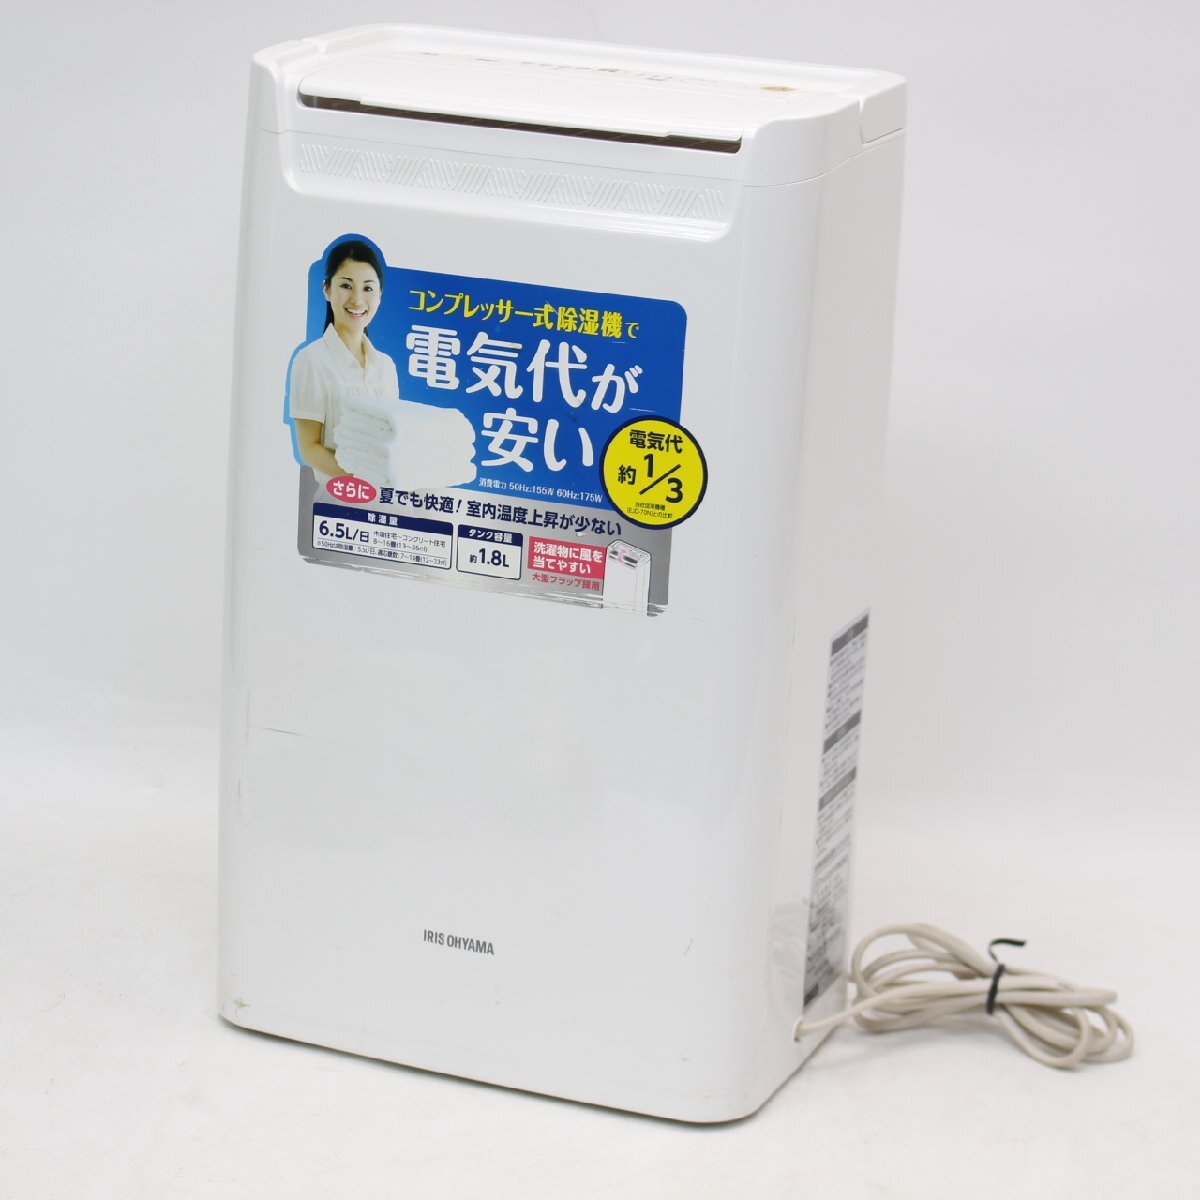 420) IRIS OHYAMA Iris o-yama одежда сухой осушитель DCE-6515 2018 год производства компрессор тип белый 